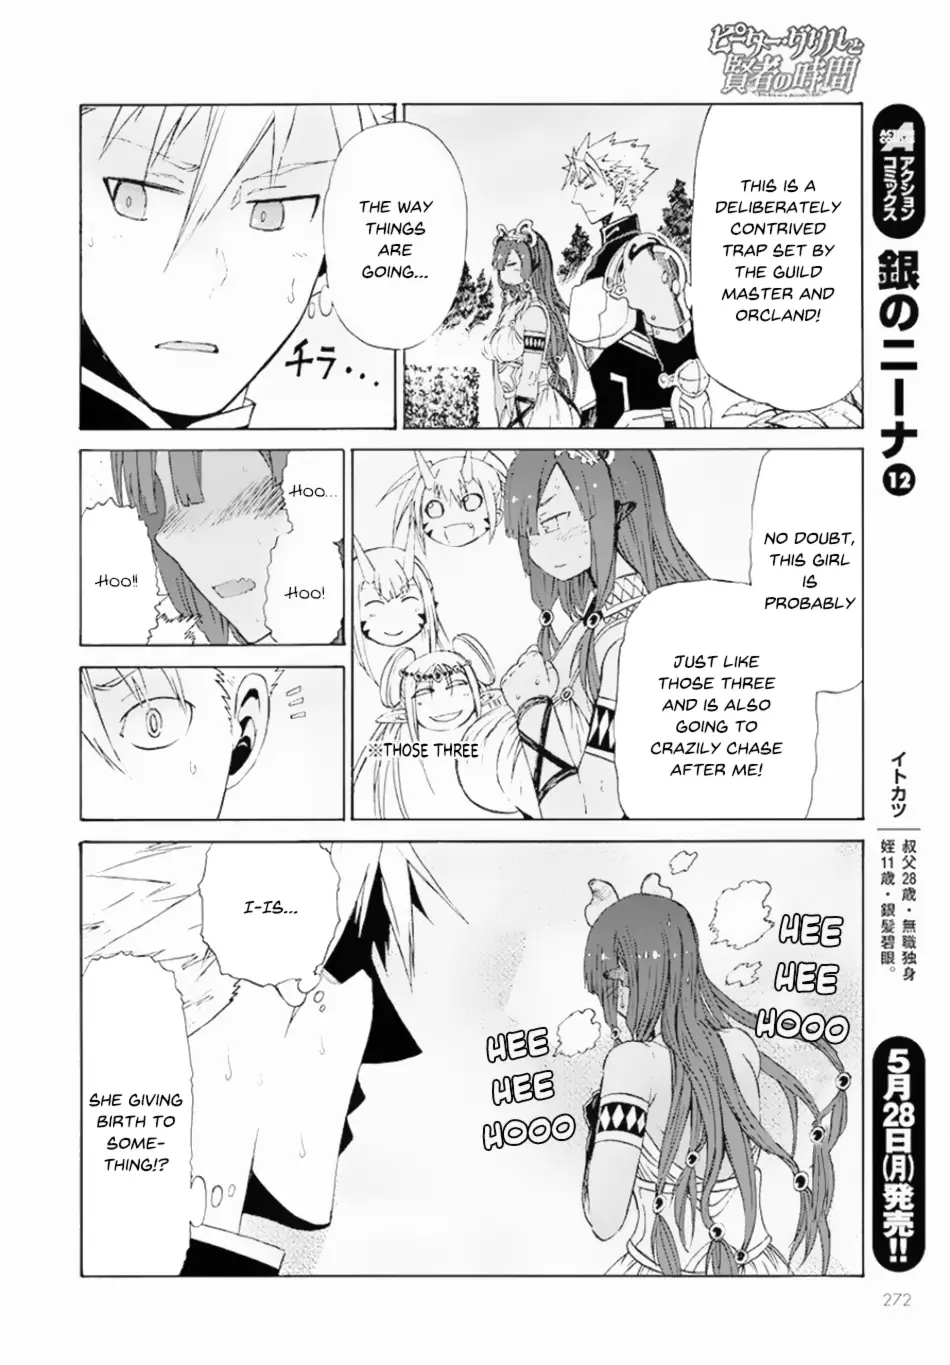 Japanese Language Manga Boys Comic Book Peter Grill to Kenja no Jikan 1-9  set